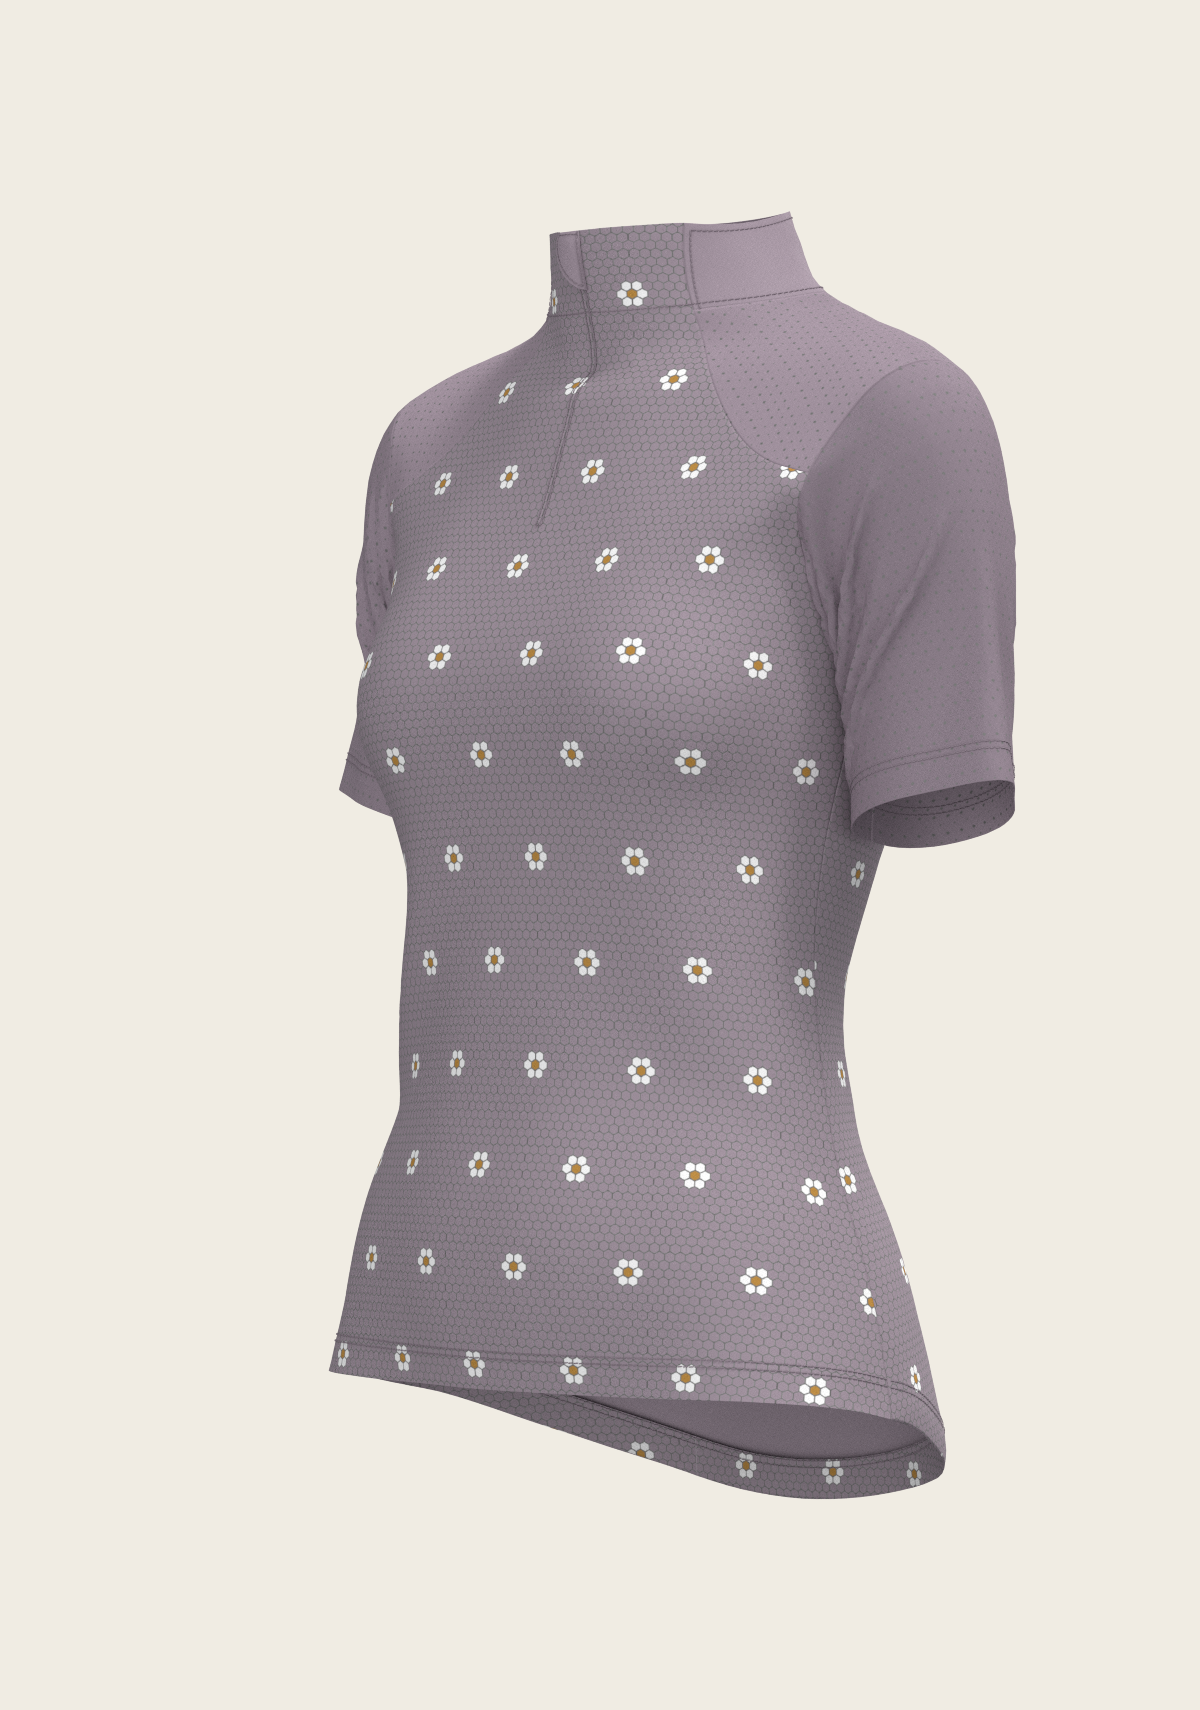 Mosaic Daises in Lavender Short Sleeve Sport Sun Shirt